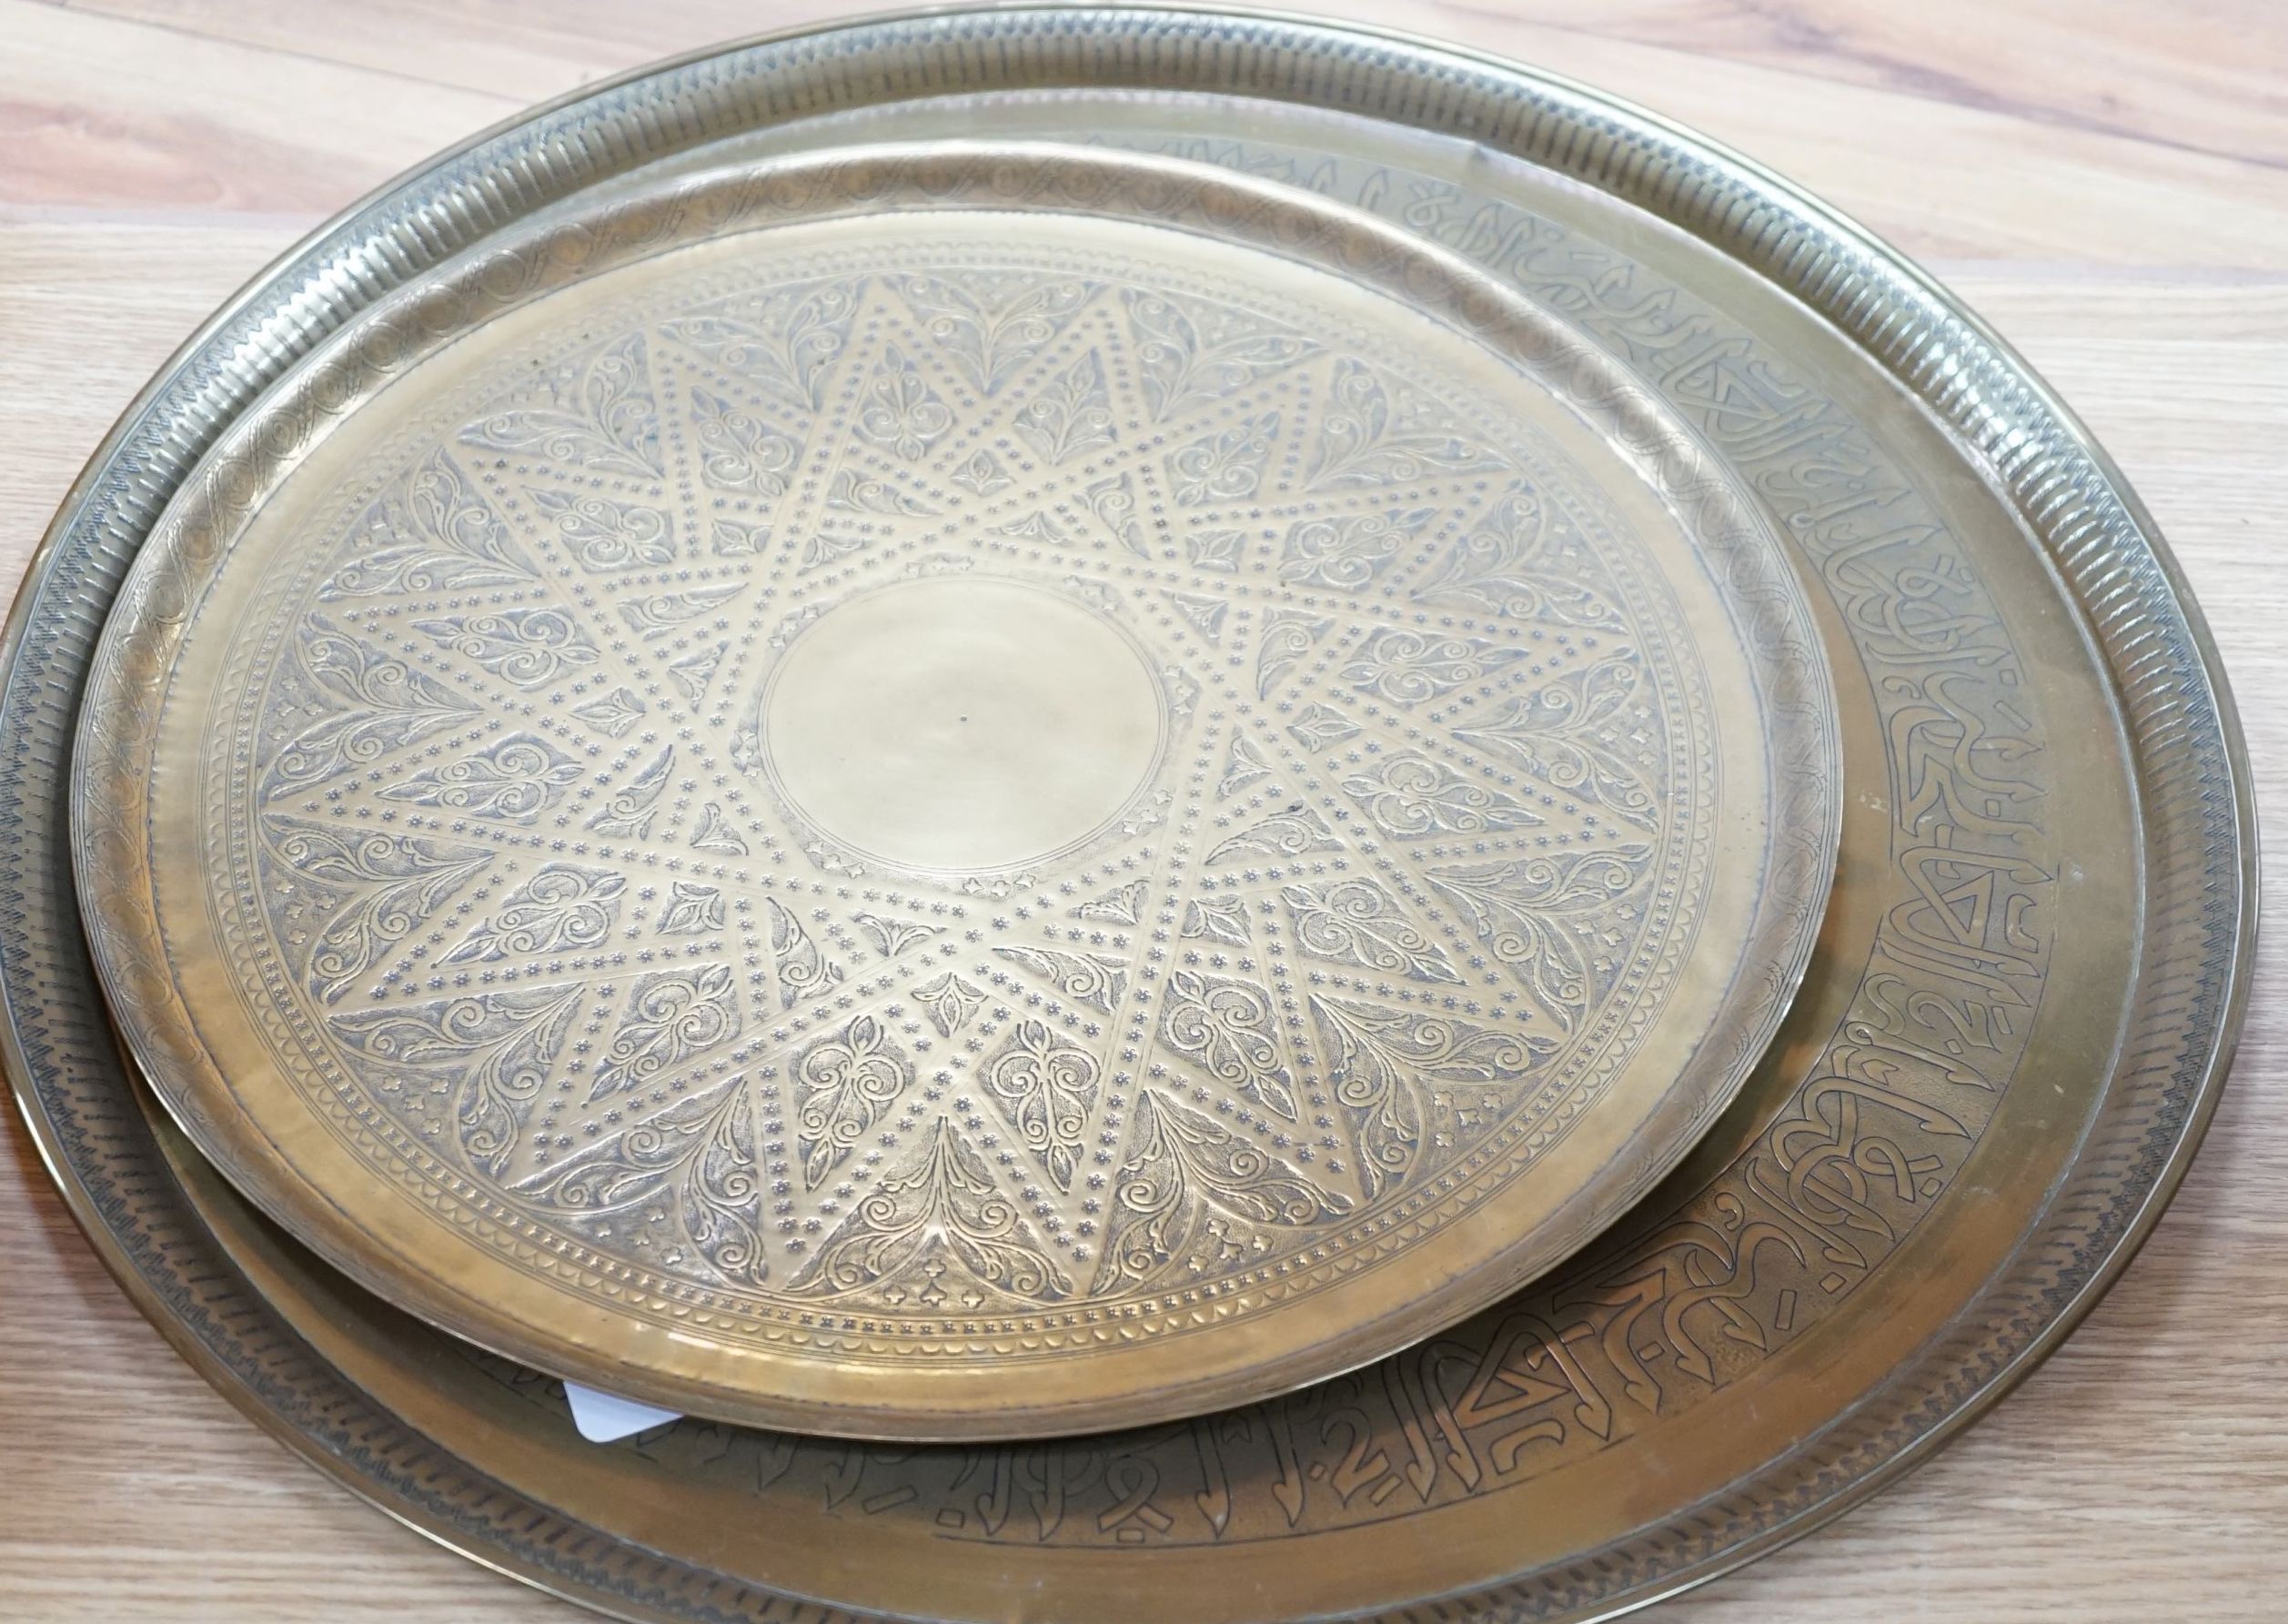 Two 19th century engraved brass circular trays, largest 58cm diameter